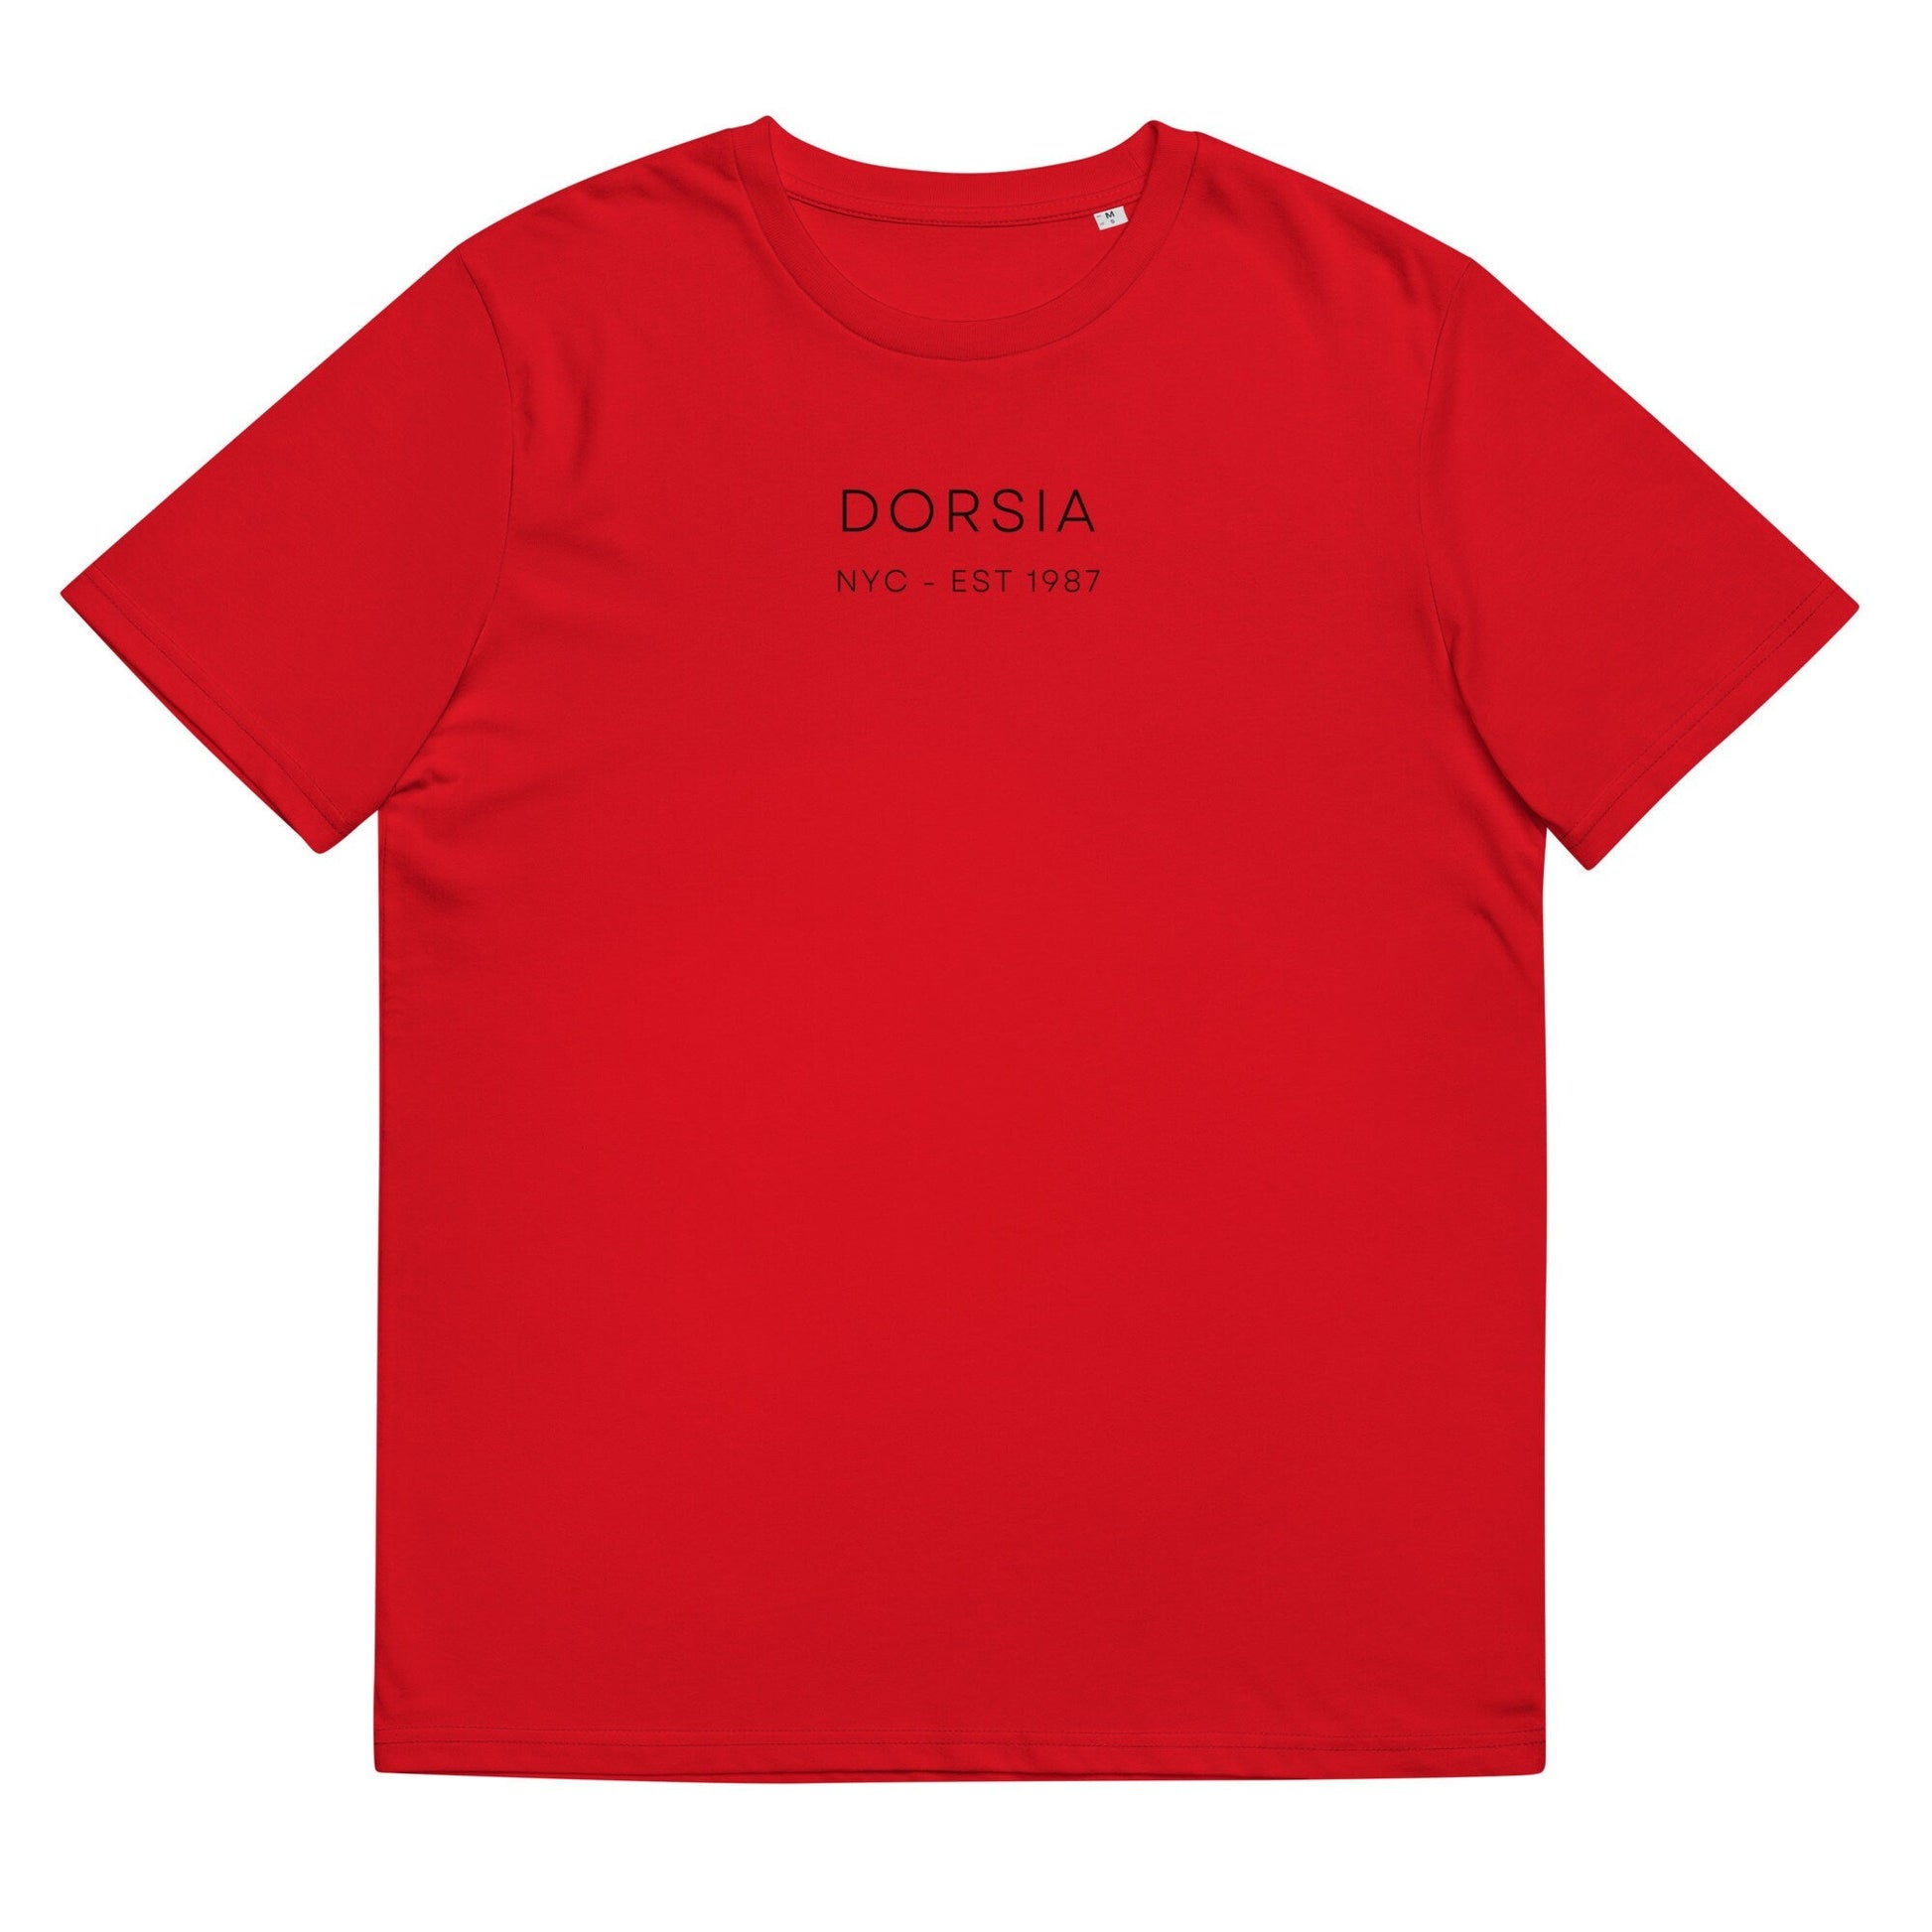 American Psycho T-shirt - Dorsia Restaurant- Gift for foodie film buffs - Organic Cotton Tee - Evilwater Originals